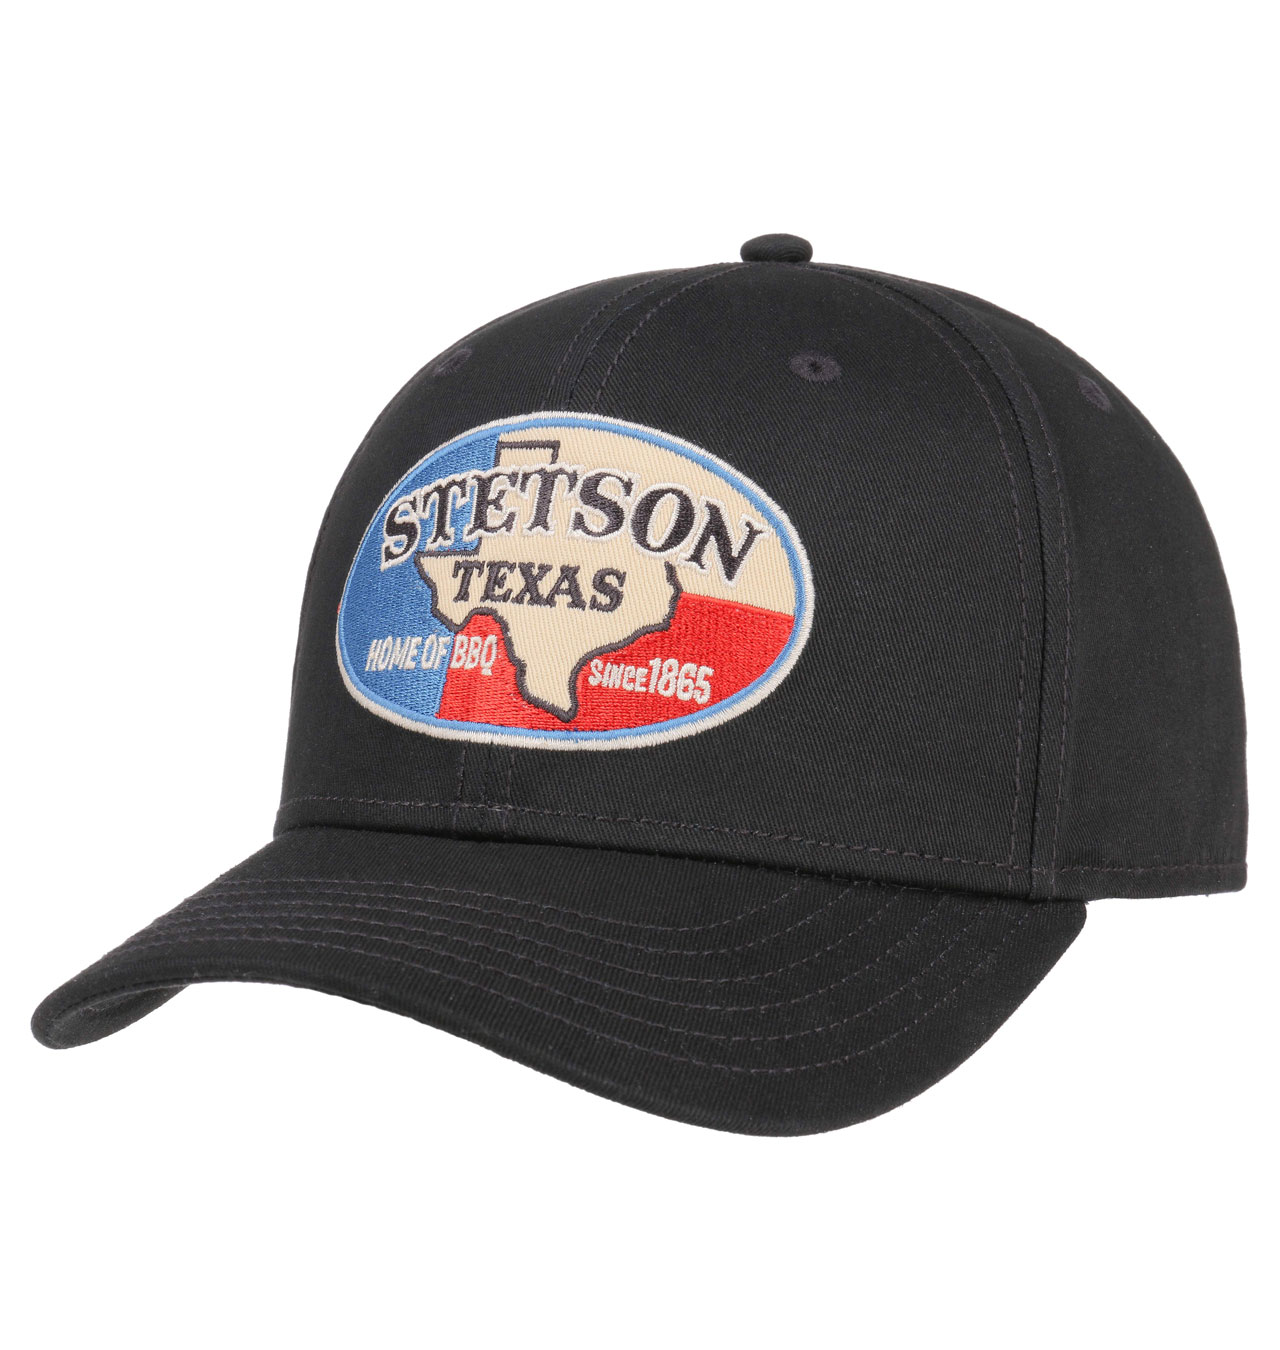 Stetson - Home of BBQ Baseball Cap - Black